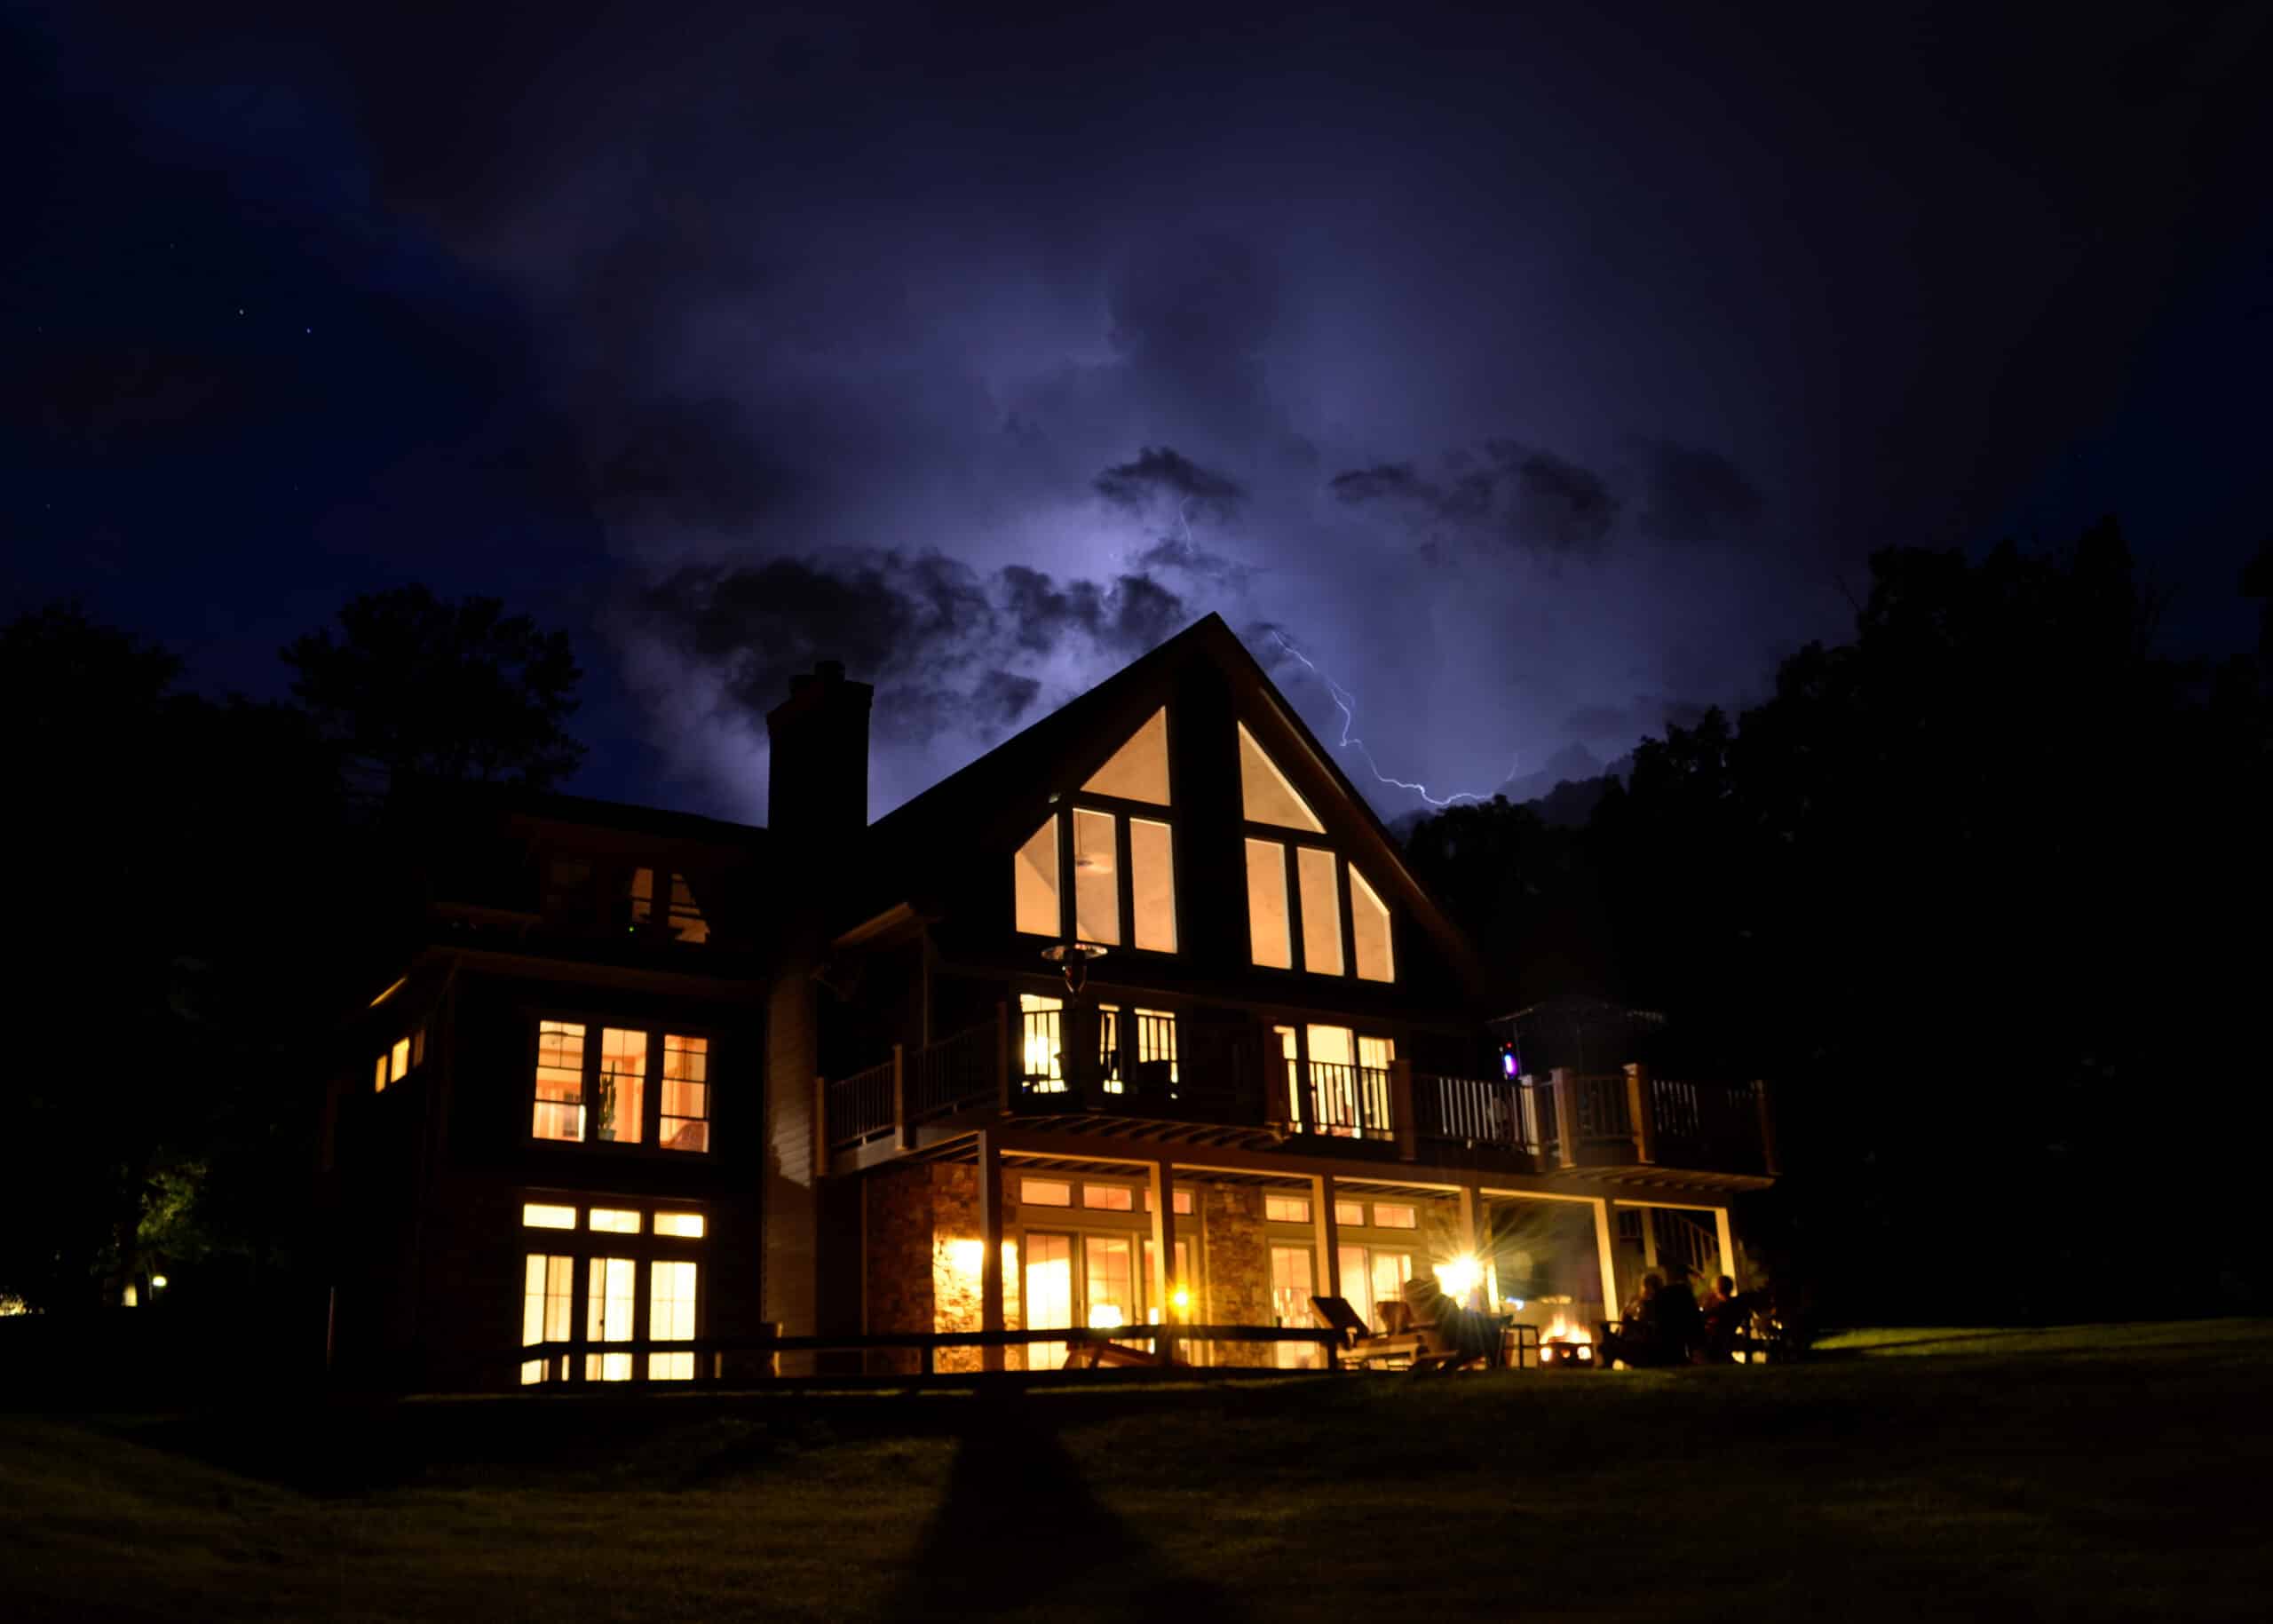 Lightning storm over a cabin